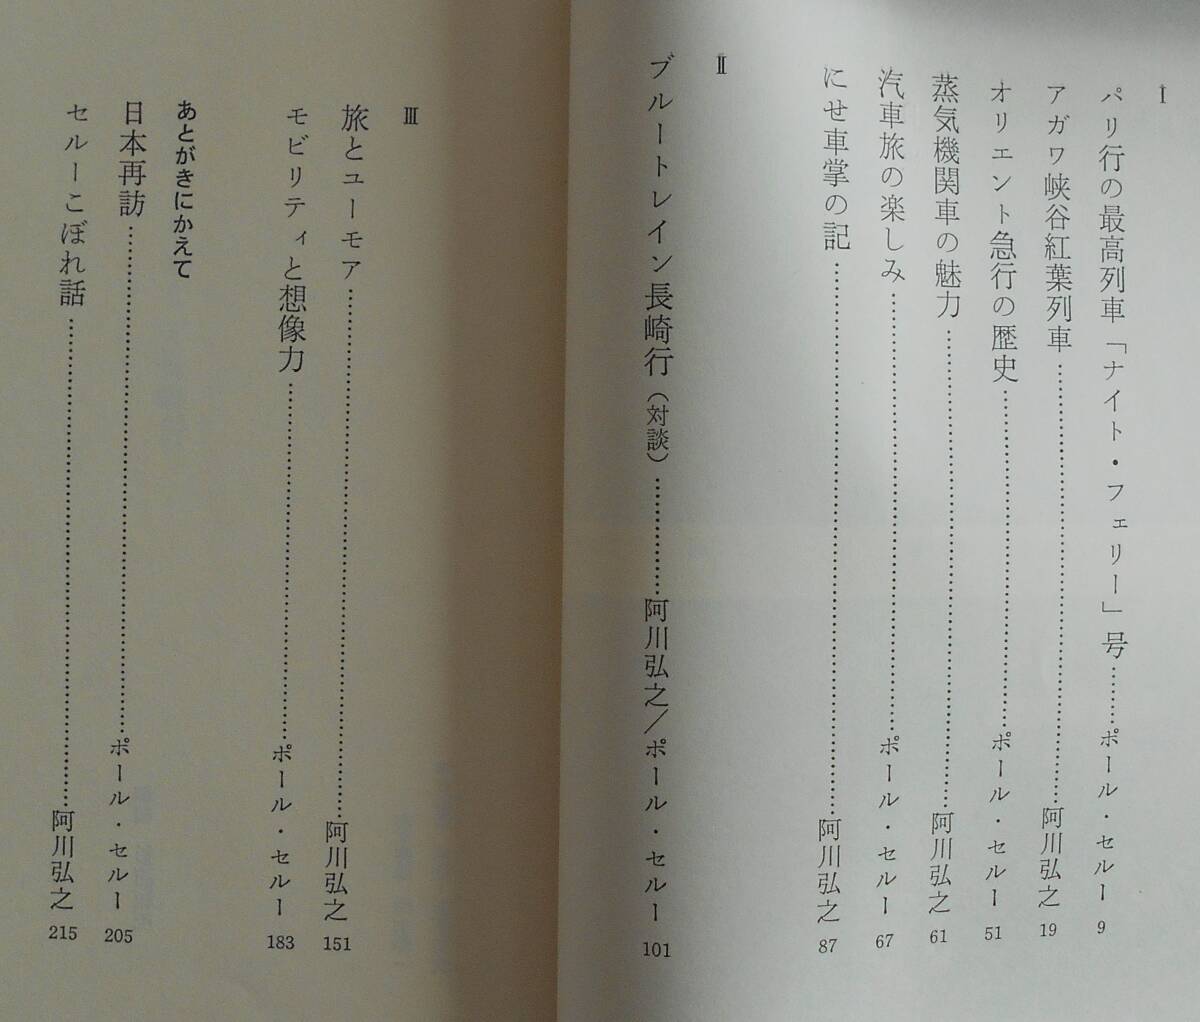  Agawa Hiroyuki paul (pole) * cell -* голубой to дождь Nagasaki line .. фирма 1979 год .